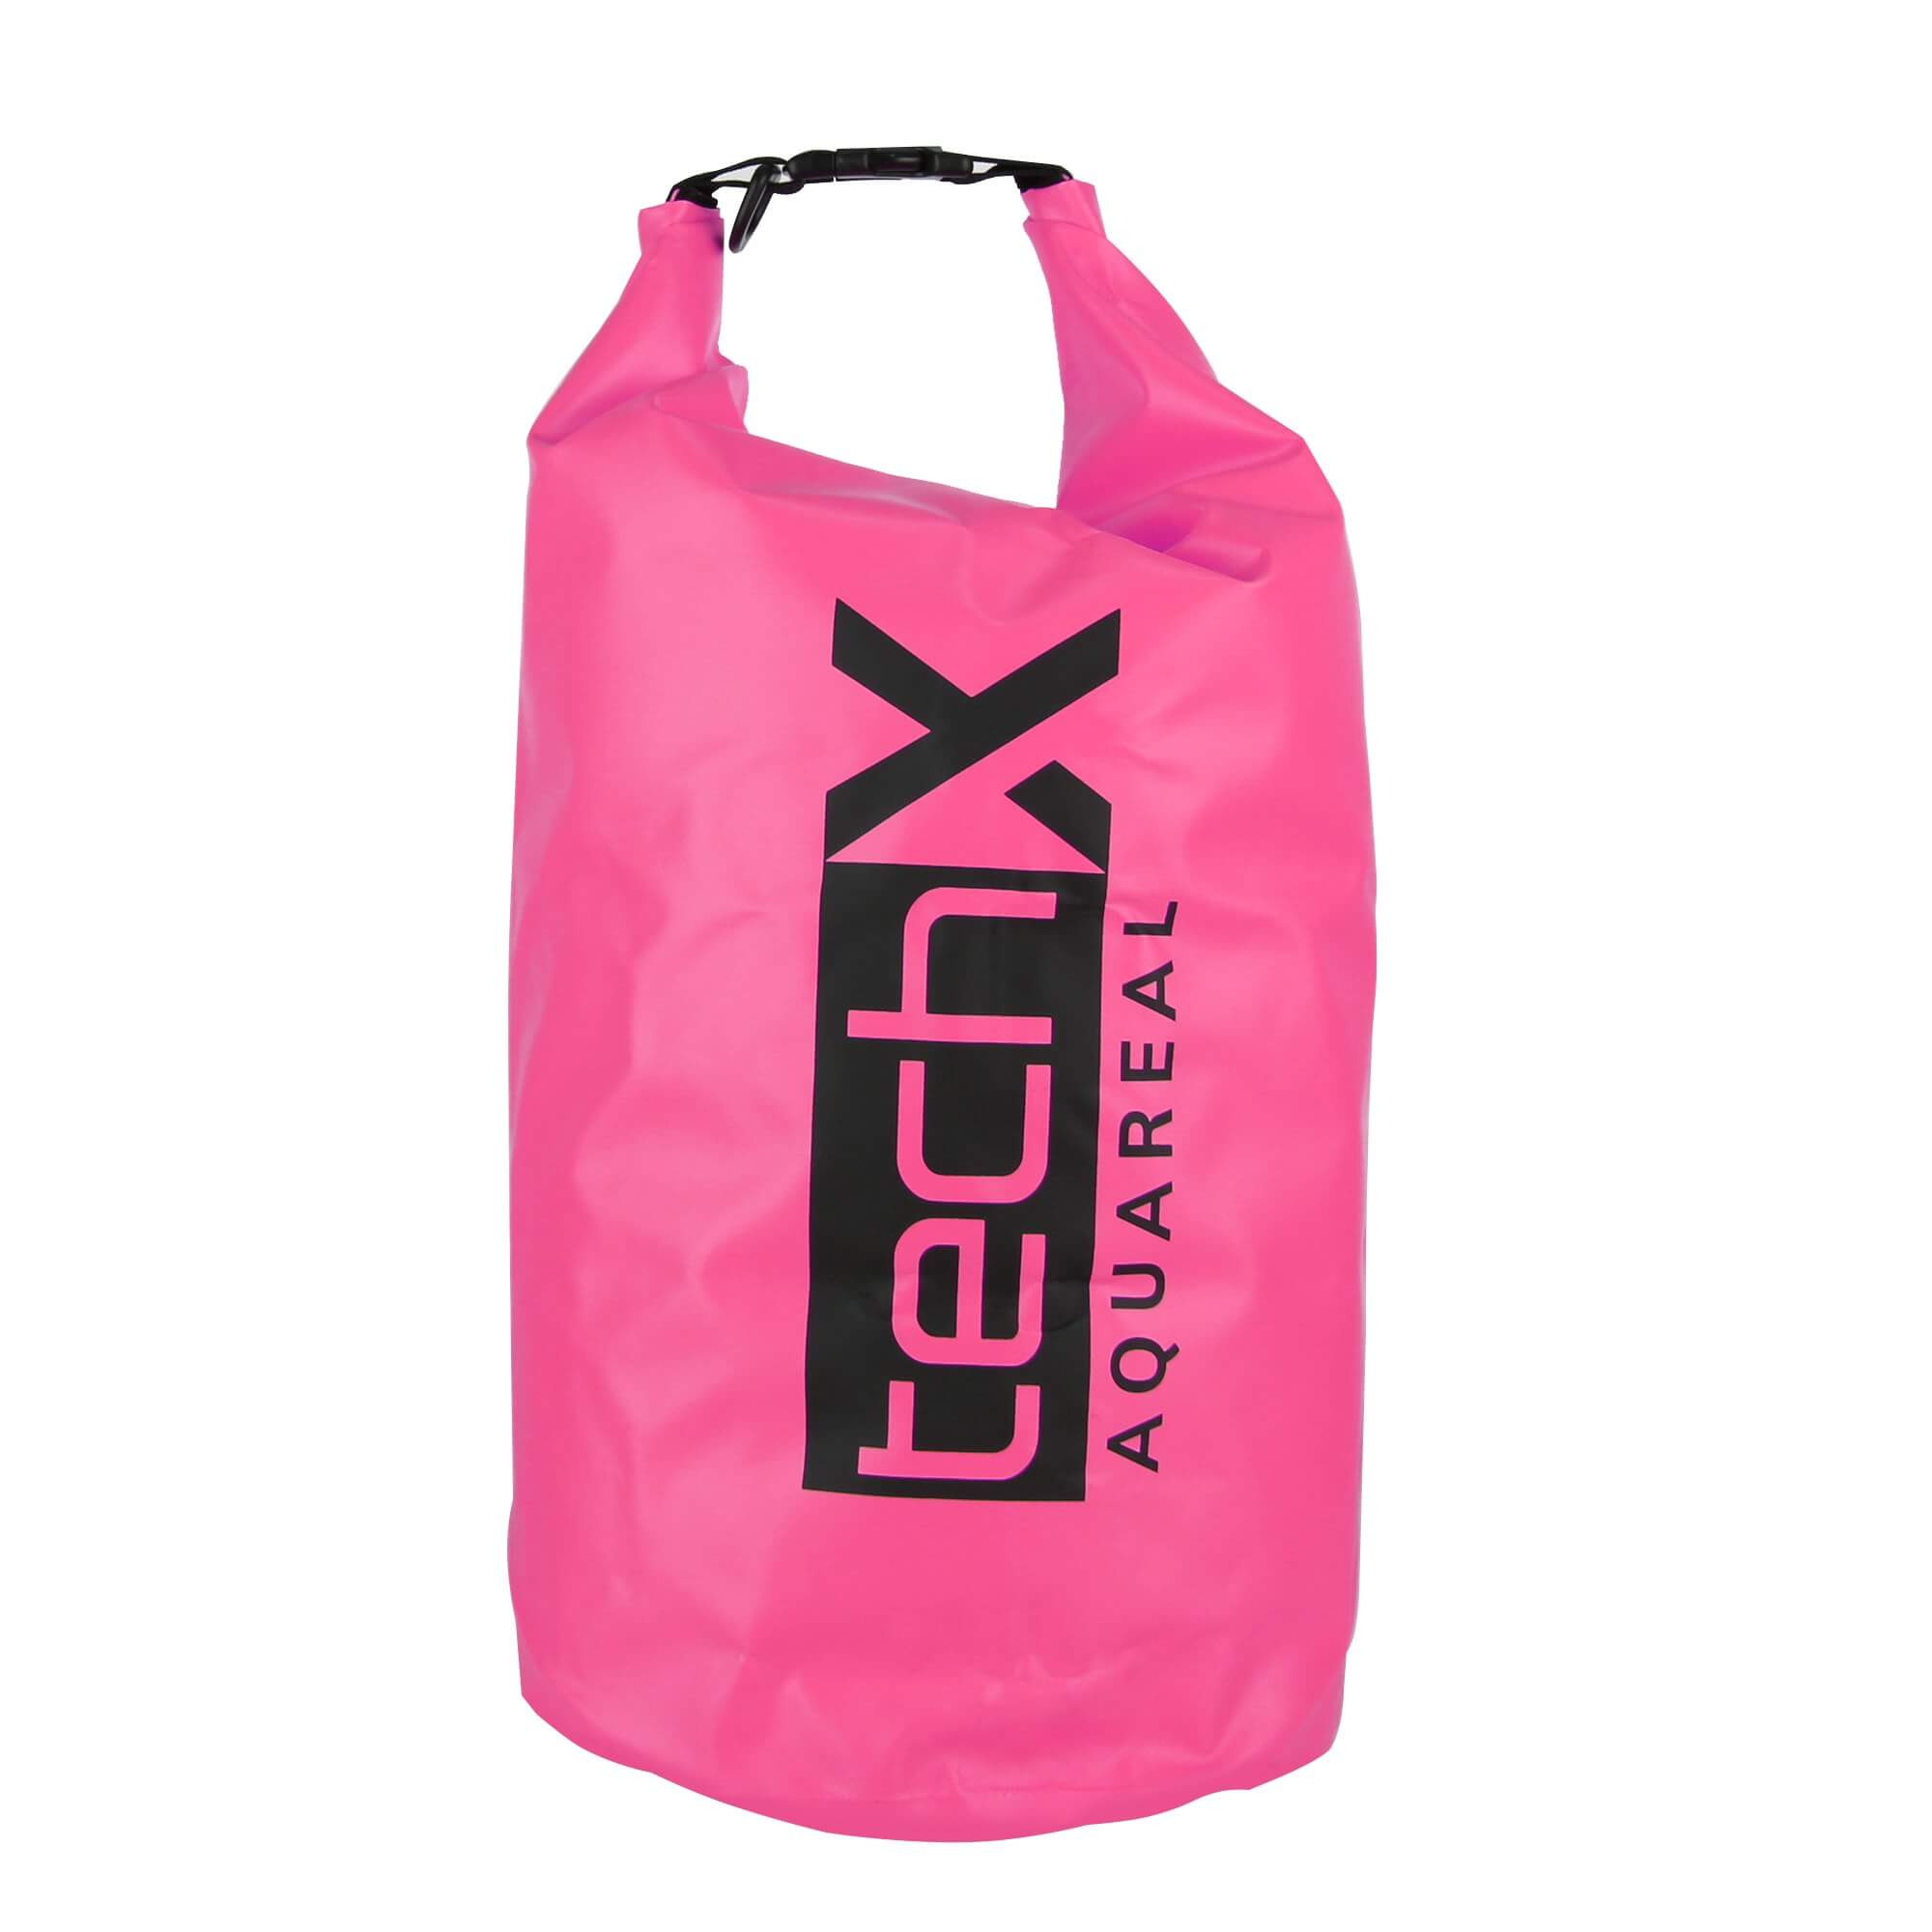 TECHX 20L Waterproof Dry Bag